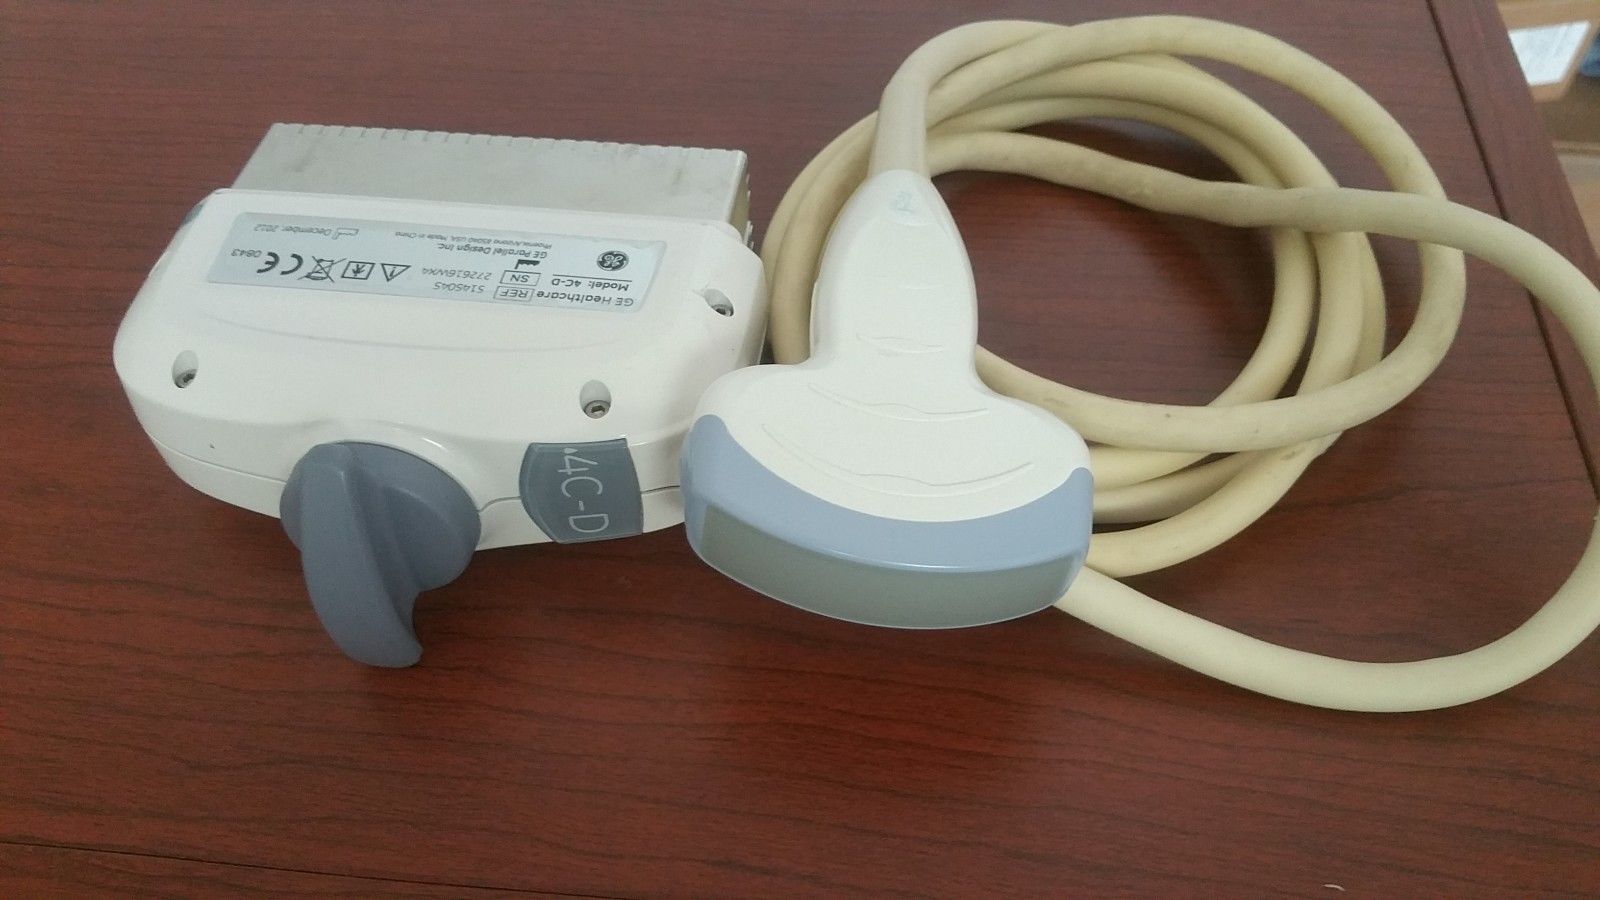 GE 4CD Ultrasound Transducer Probe